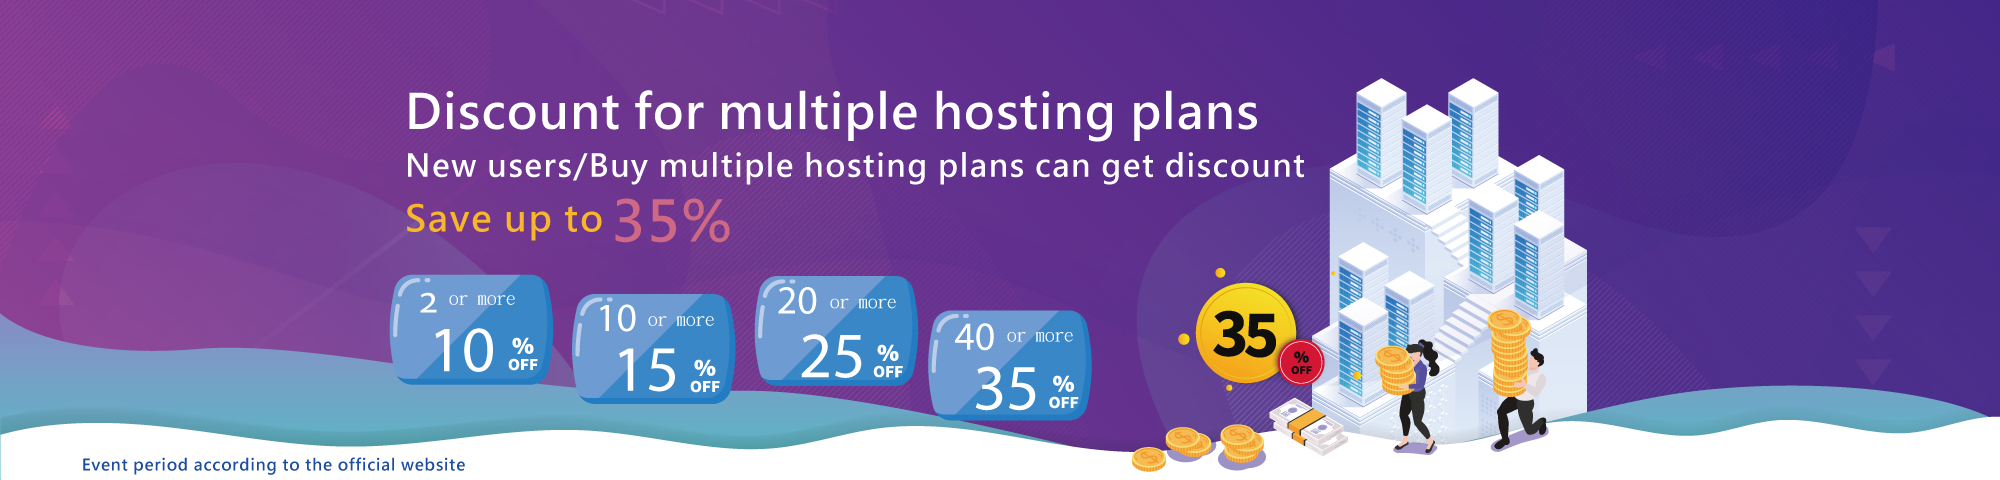 Discount for multiple hosting plan